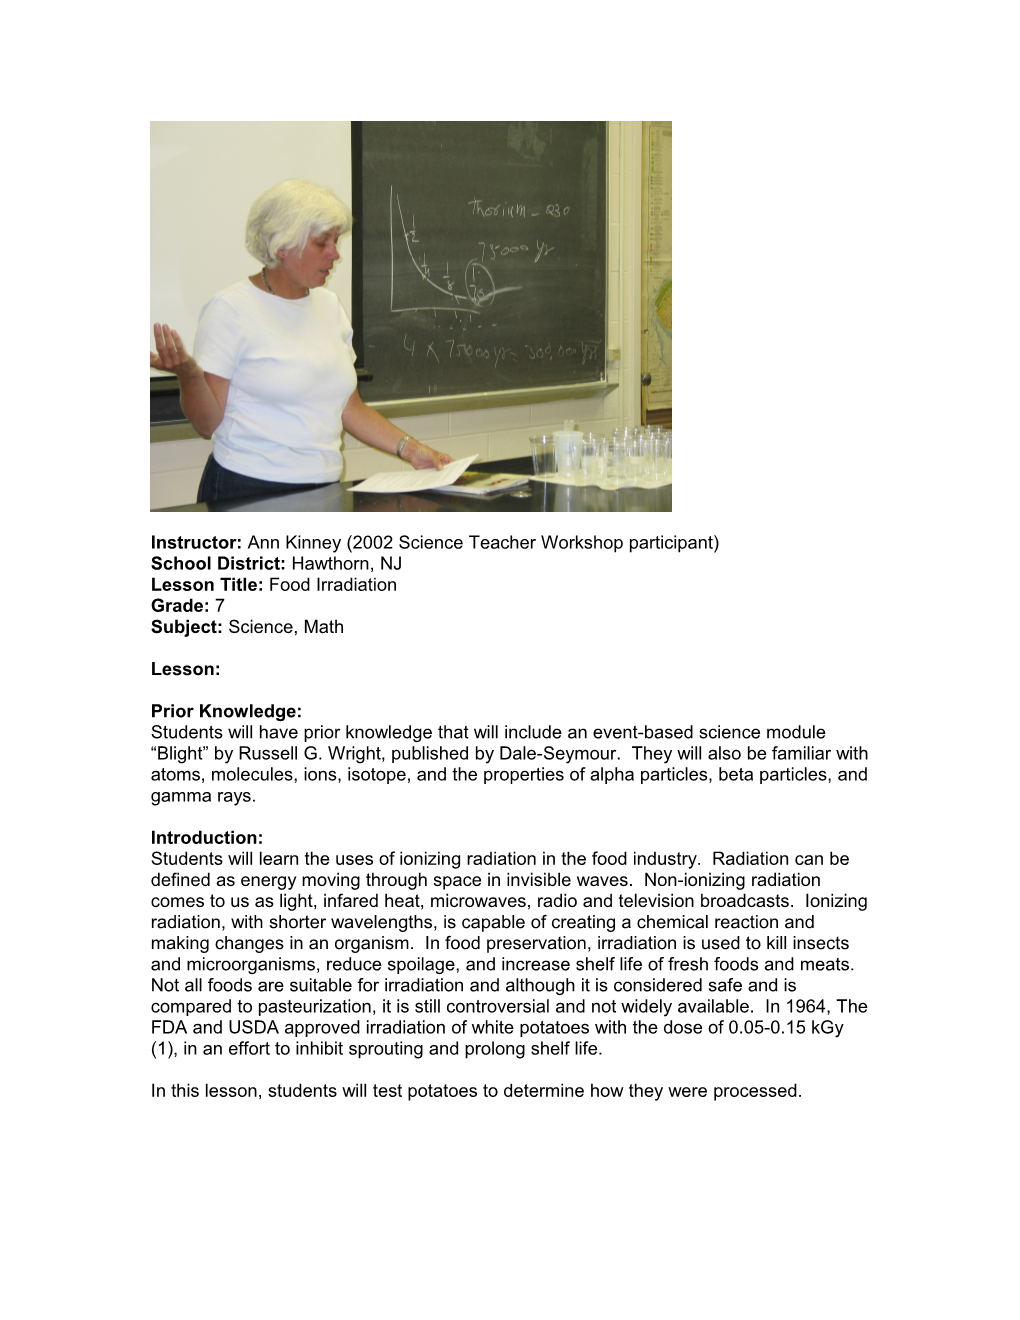 Instructor: Ann Kinney (2002 Science Teacher Workshop Participant)